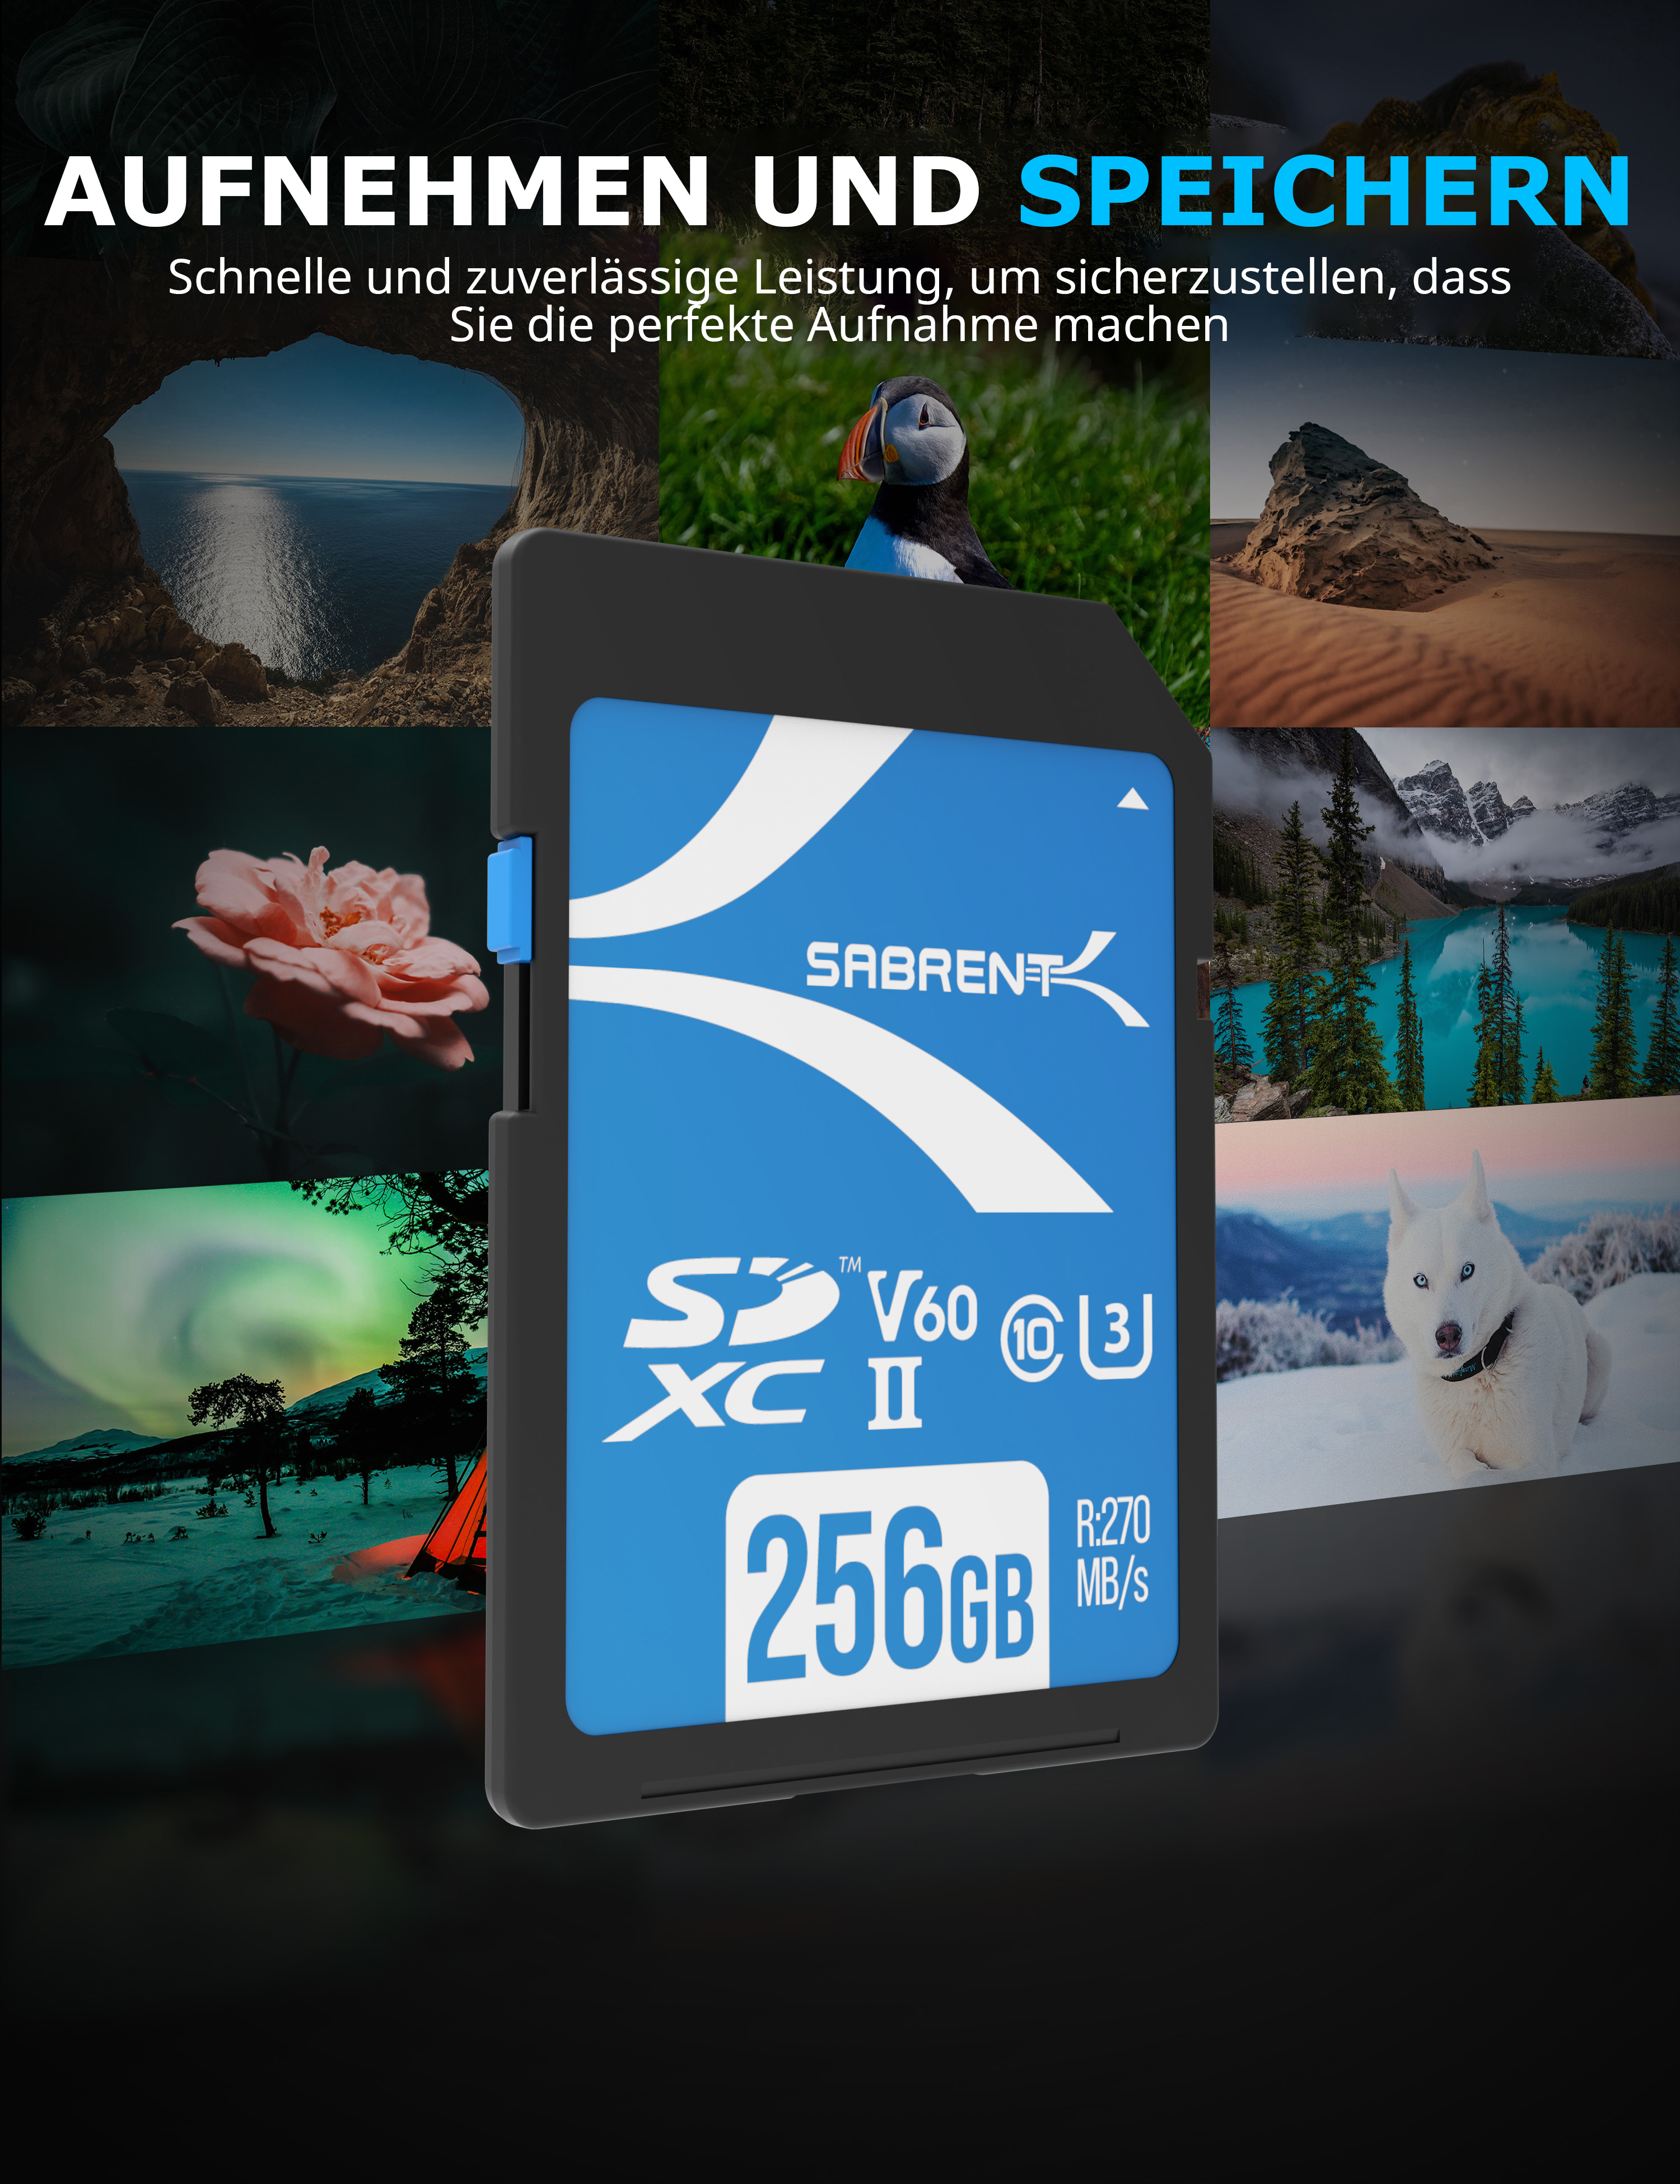 SABRENT V60 256GB SD SDXC UHS-II, GB, MB/s 256 SD 270 Karte